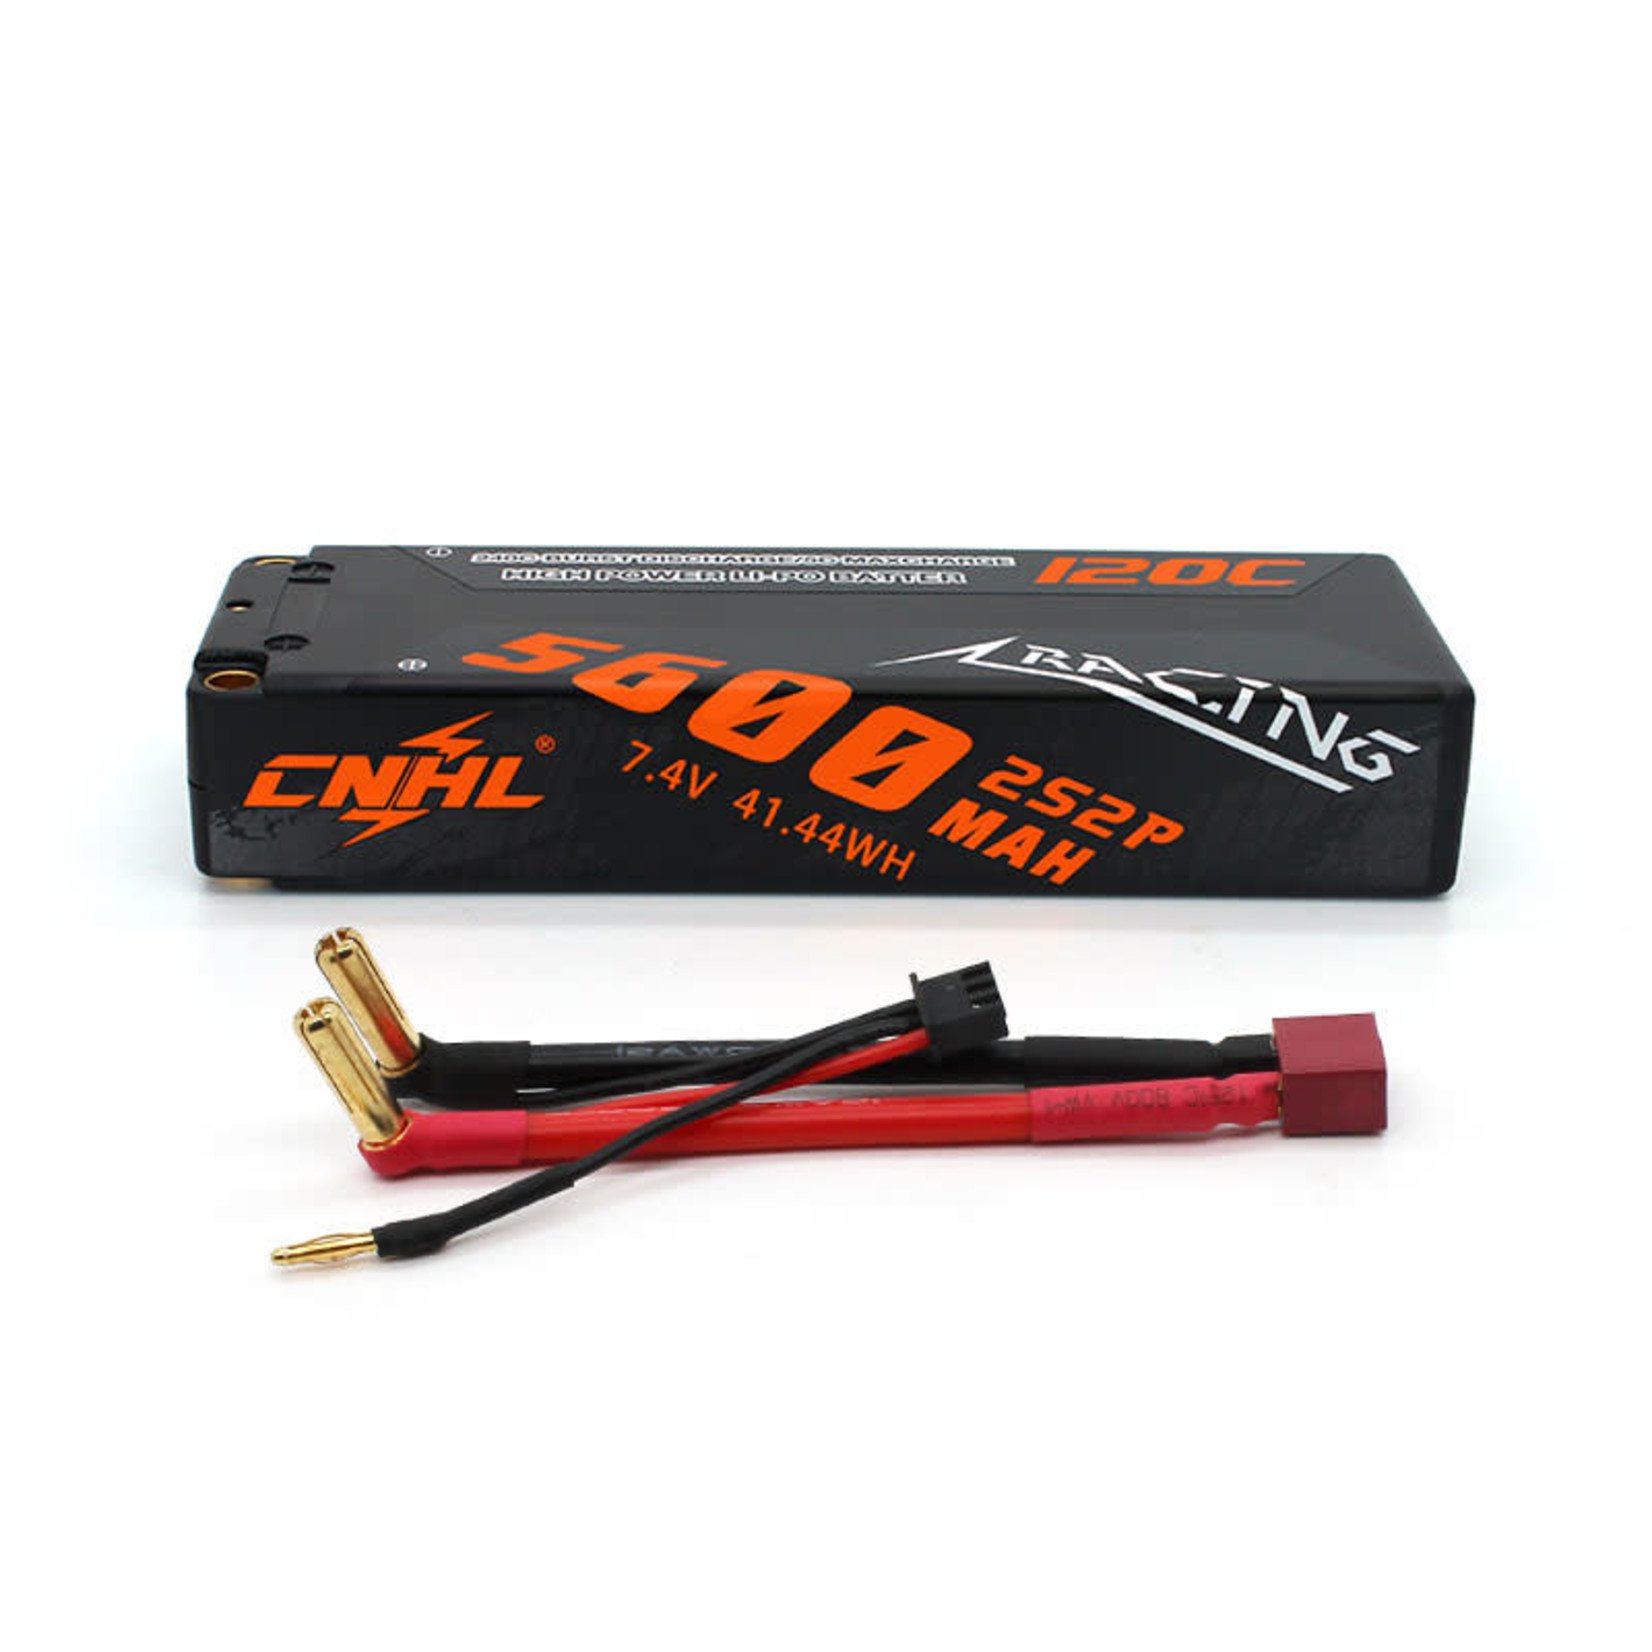 CNHL Racing CNHL Racing Series 5600MAH 7.4V 2S2P 120C Lipo Battery Hard Case Car with Deans Plug #Hc5601202x